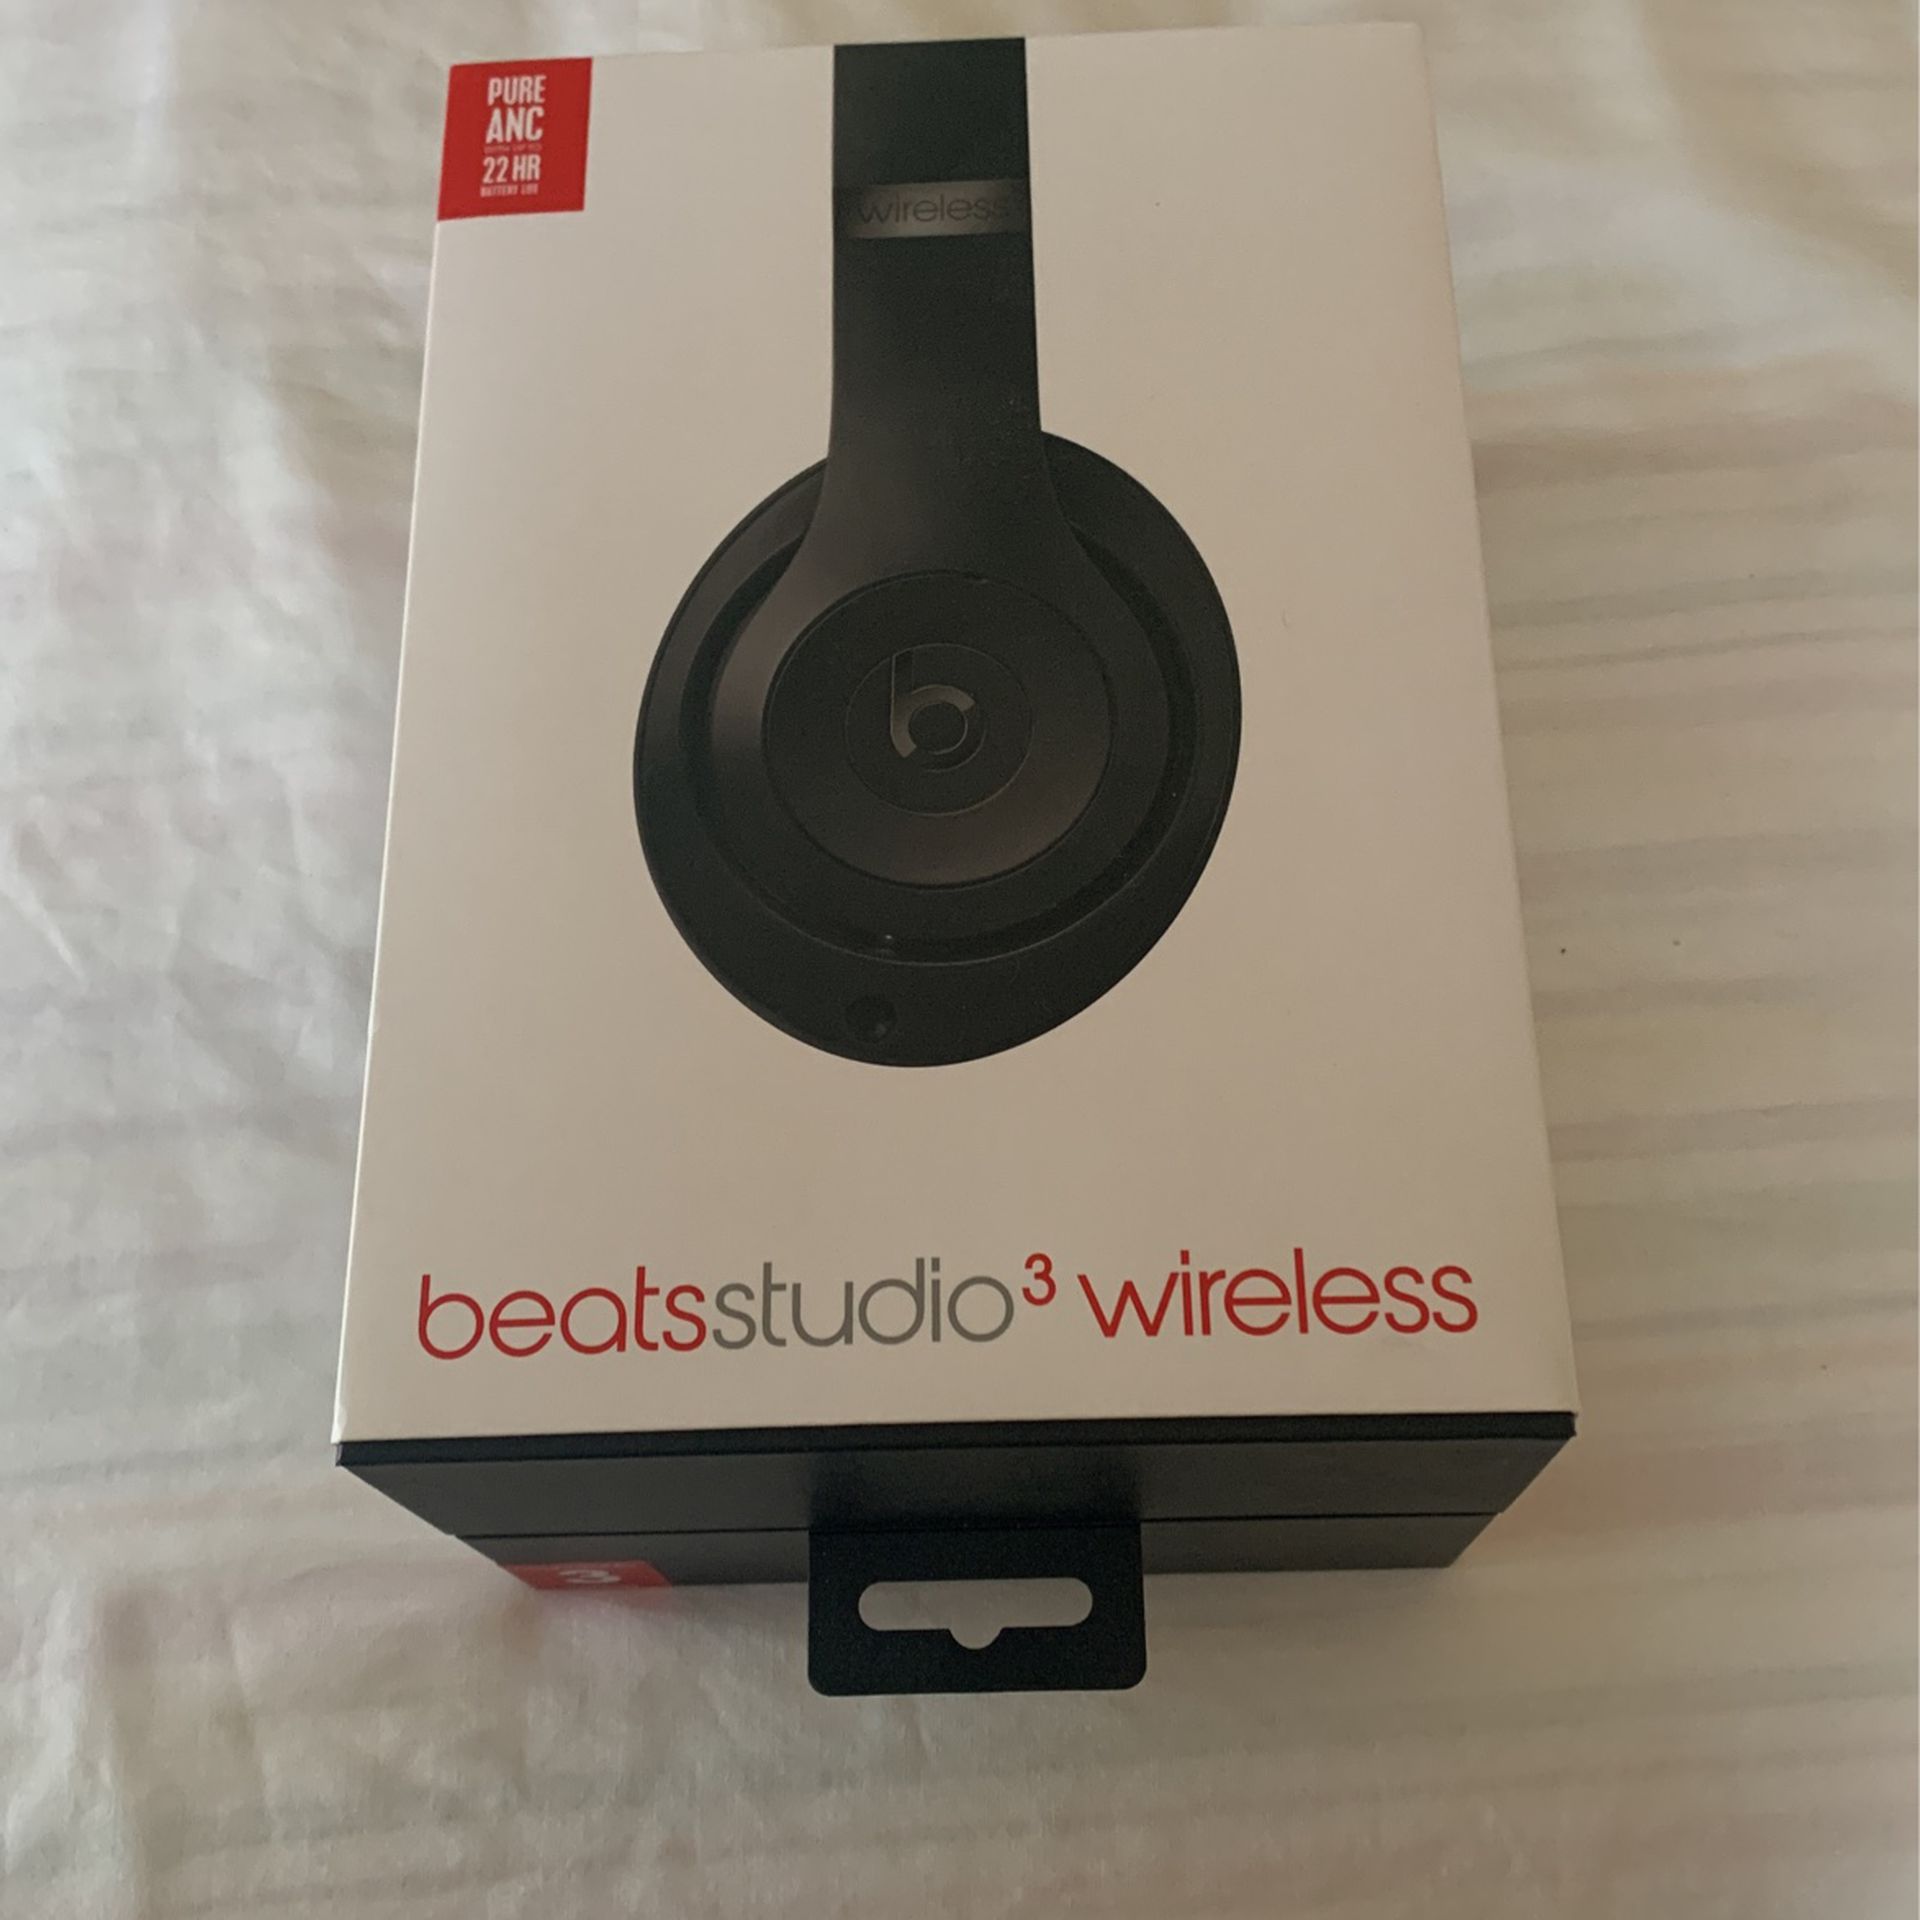 New Beats studio 3 Wireless Headphones 